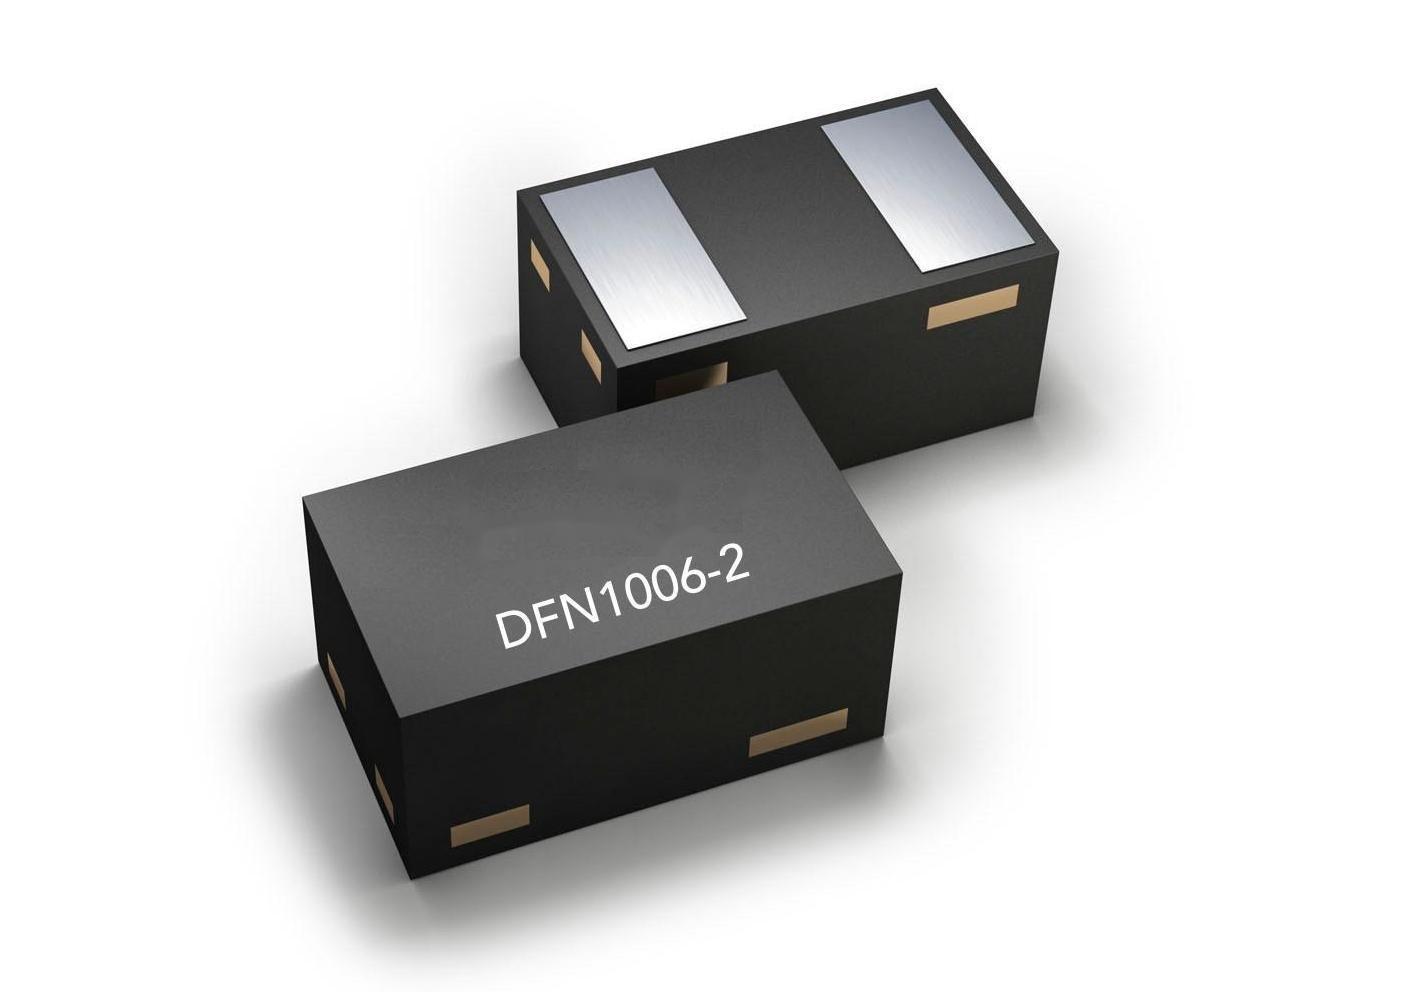 DL0511P1  低电容静电防护二极管    DFN1006 封装 5V 40W 2.5A 0.3P